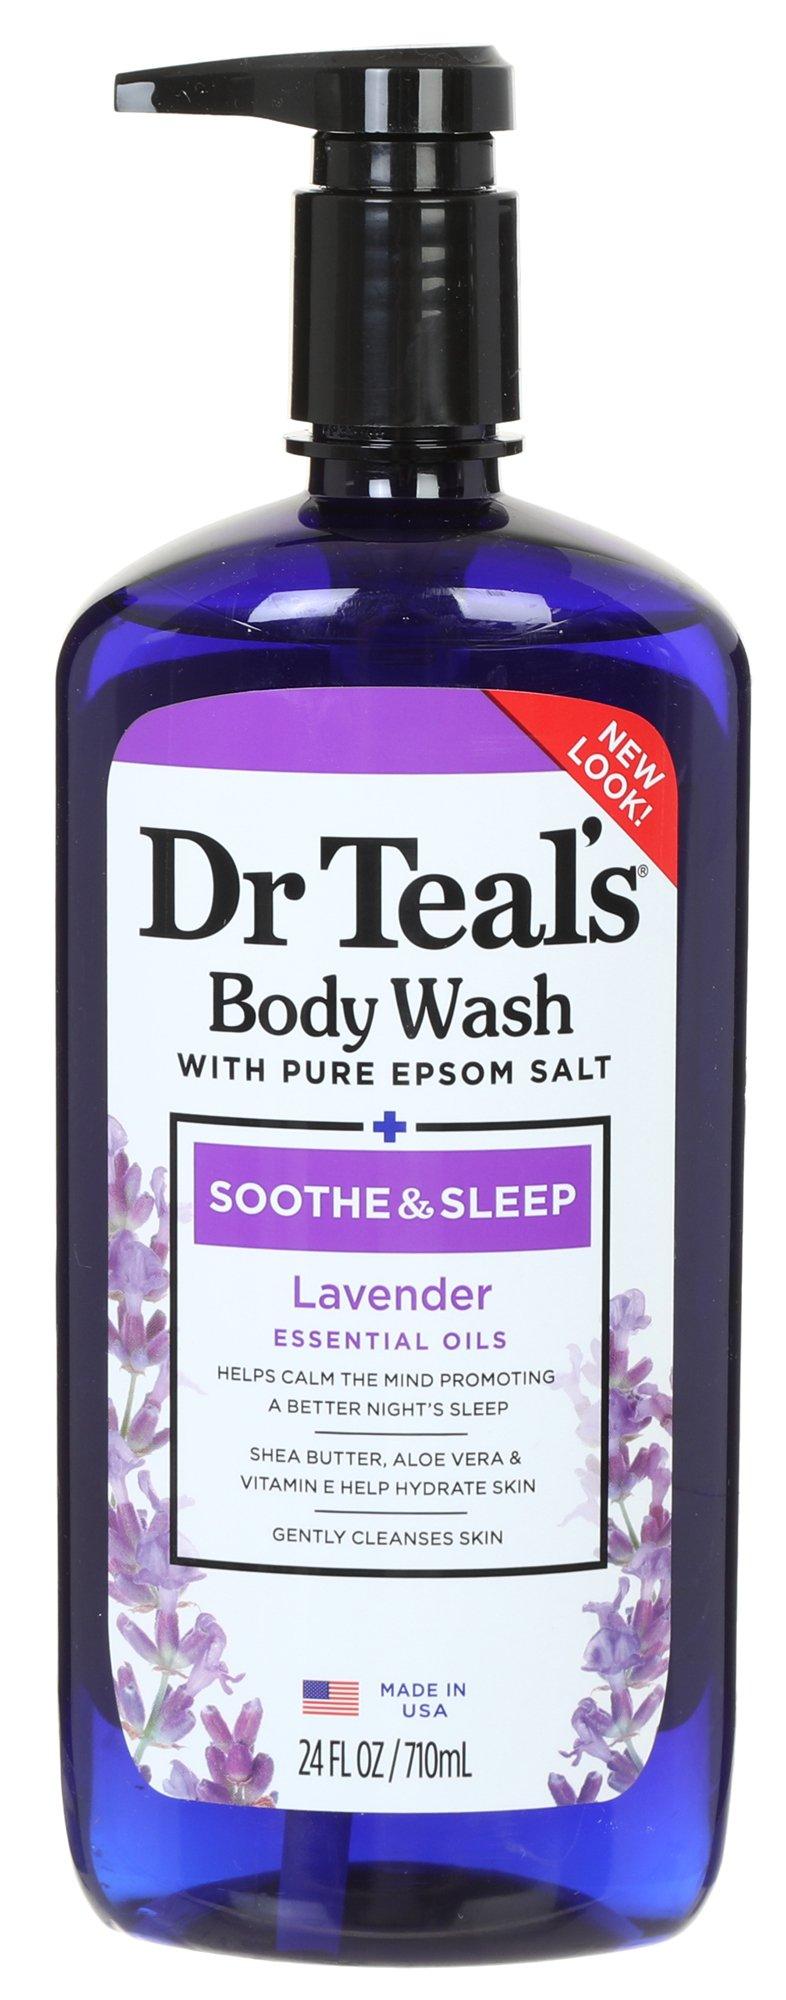 Dr Teals Sooth & Sleep Lavender Bath Wash